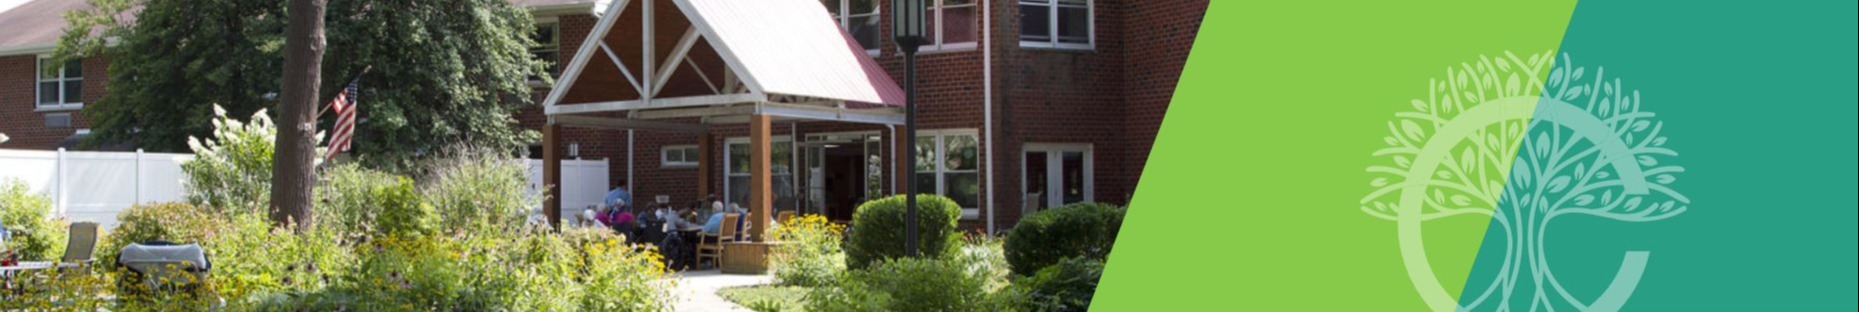 Cambridge Rehabilitation and Healthcare Center background